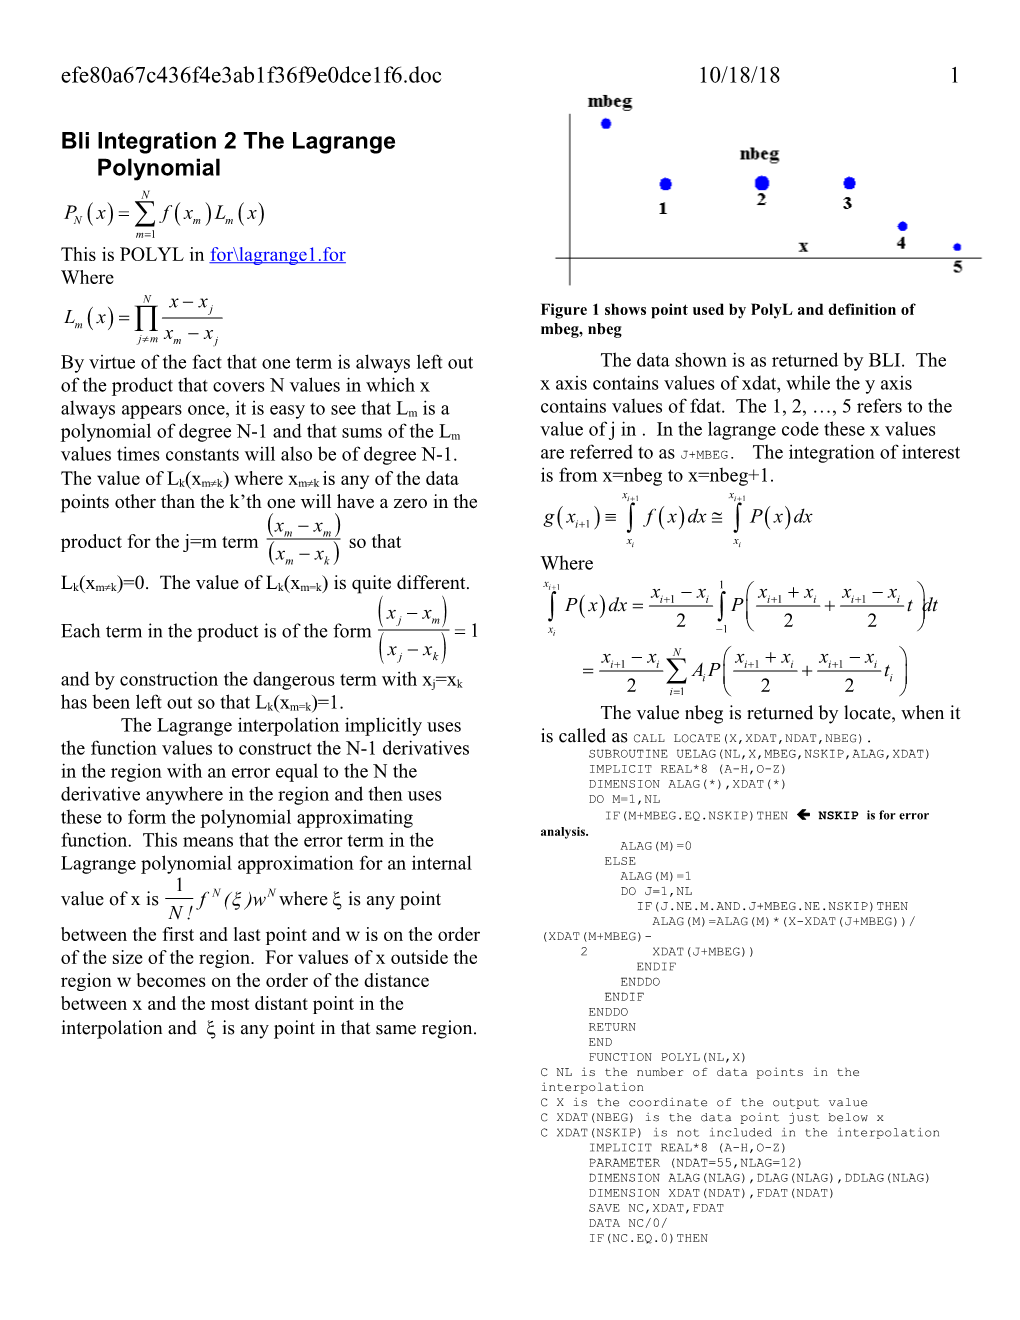 Gauss Quadrature / BLI